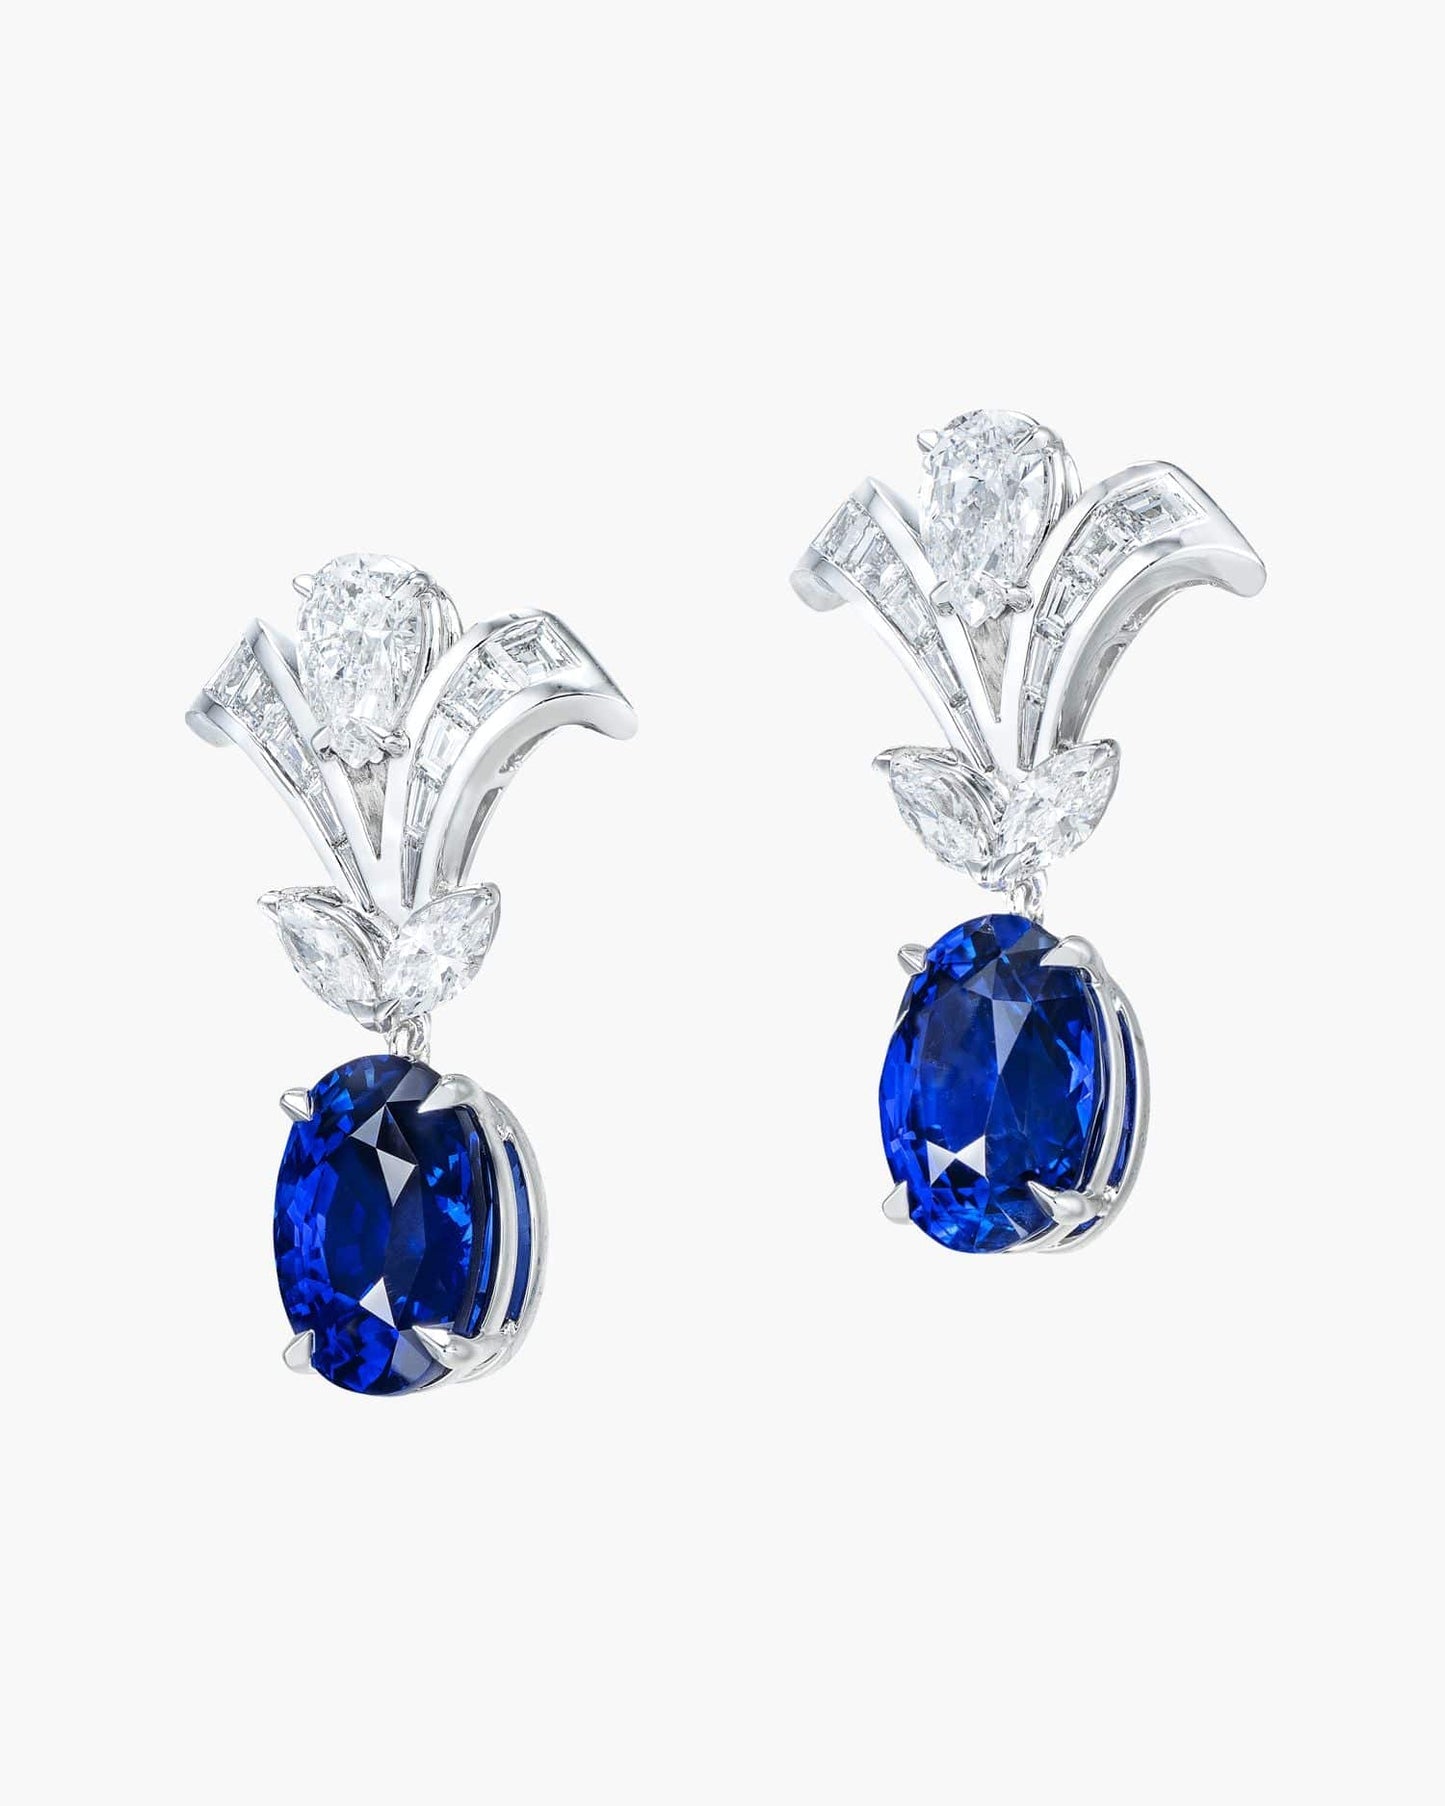 8.18 carat Oval Shape Ceylon Sapphire and Diamond Earrings